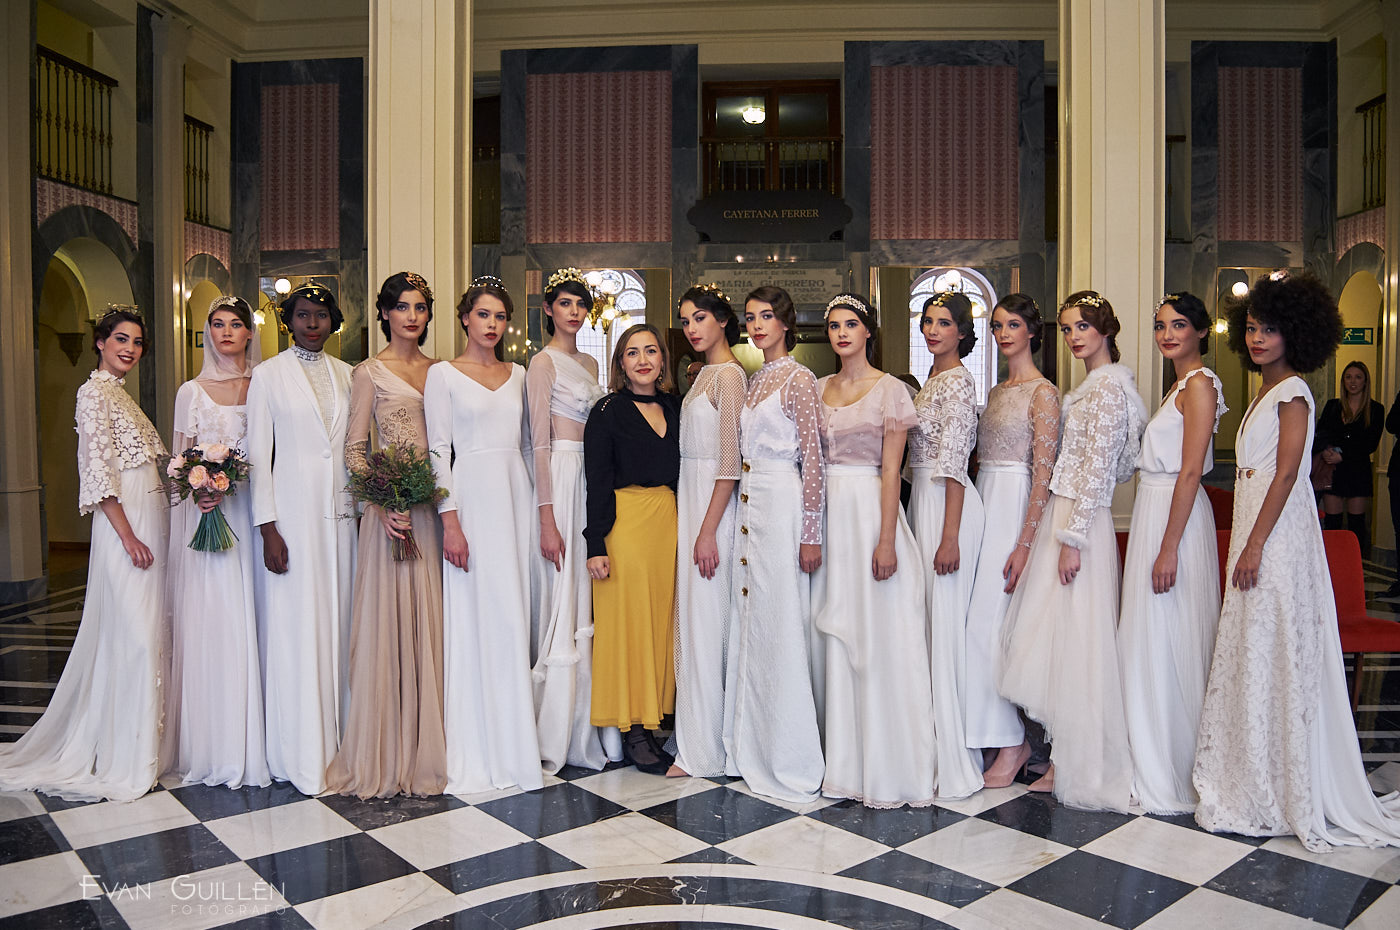 Modelos con vestidos de novia junto a Cayetana Ferrer